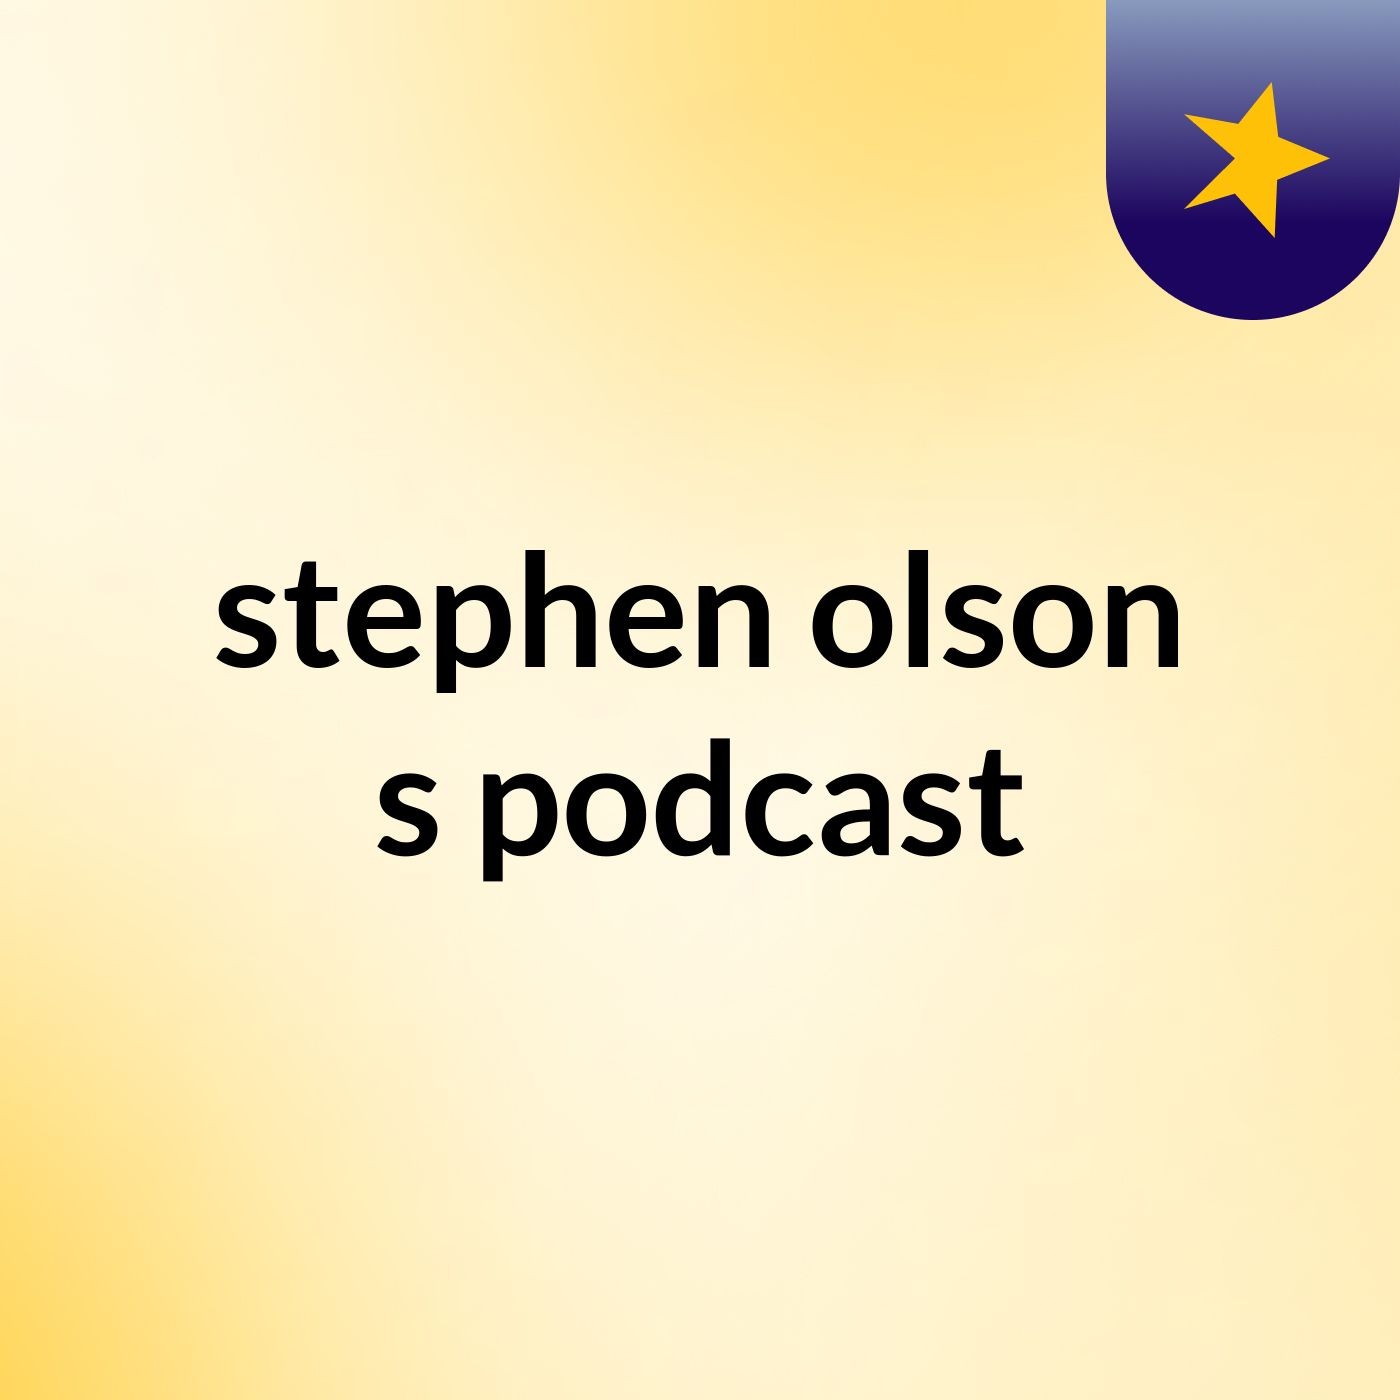 Episode 5 - stephen olson's podcast